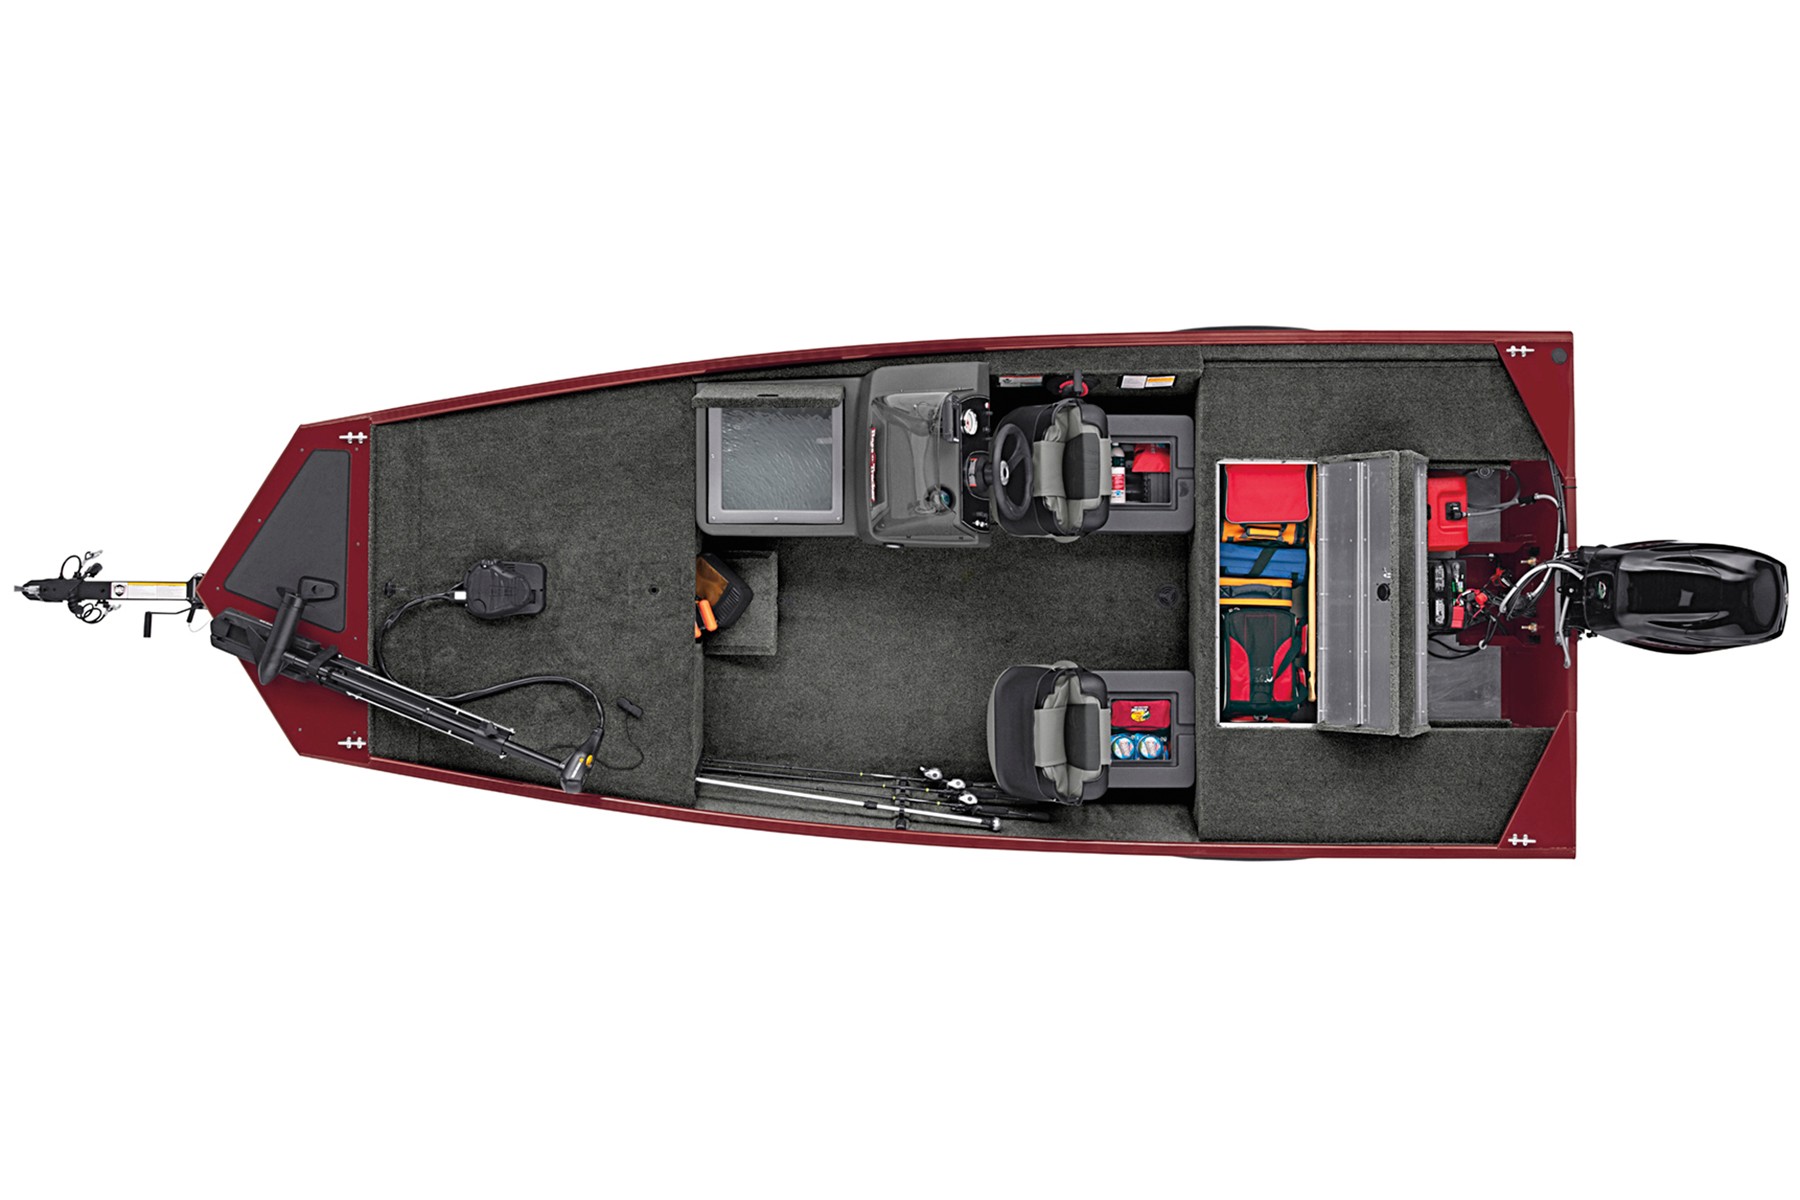 aluminum fishing boat  2022 Tracker Bass Tracker Classic XL Exclusive Auto Marine mod v power boat outboard motor